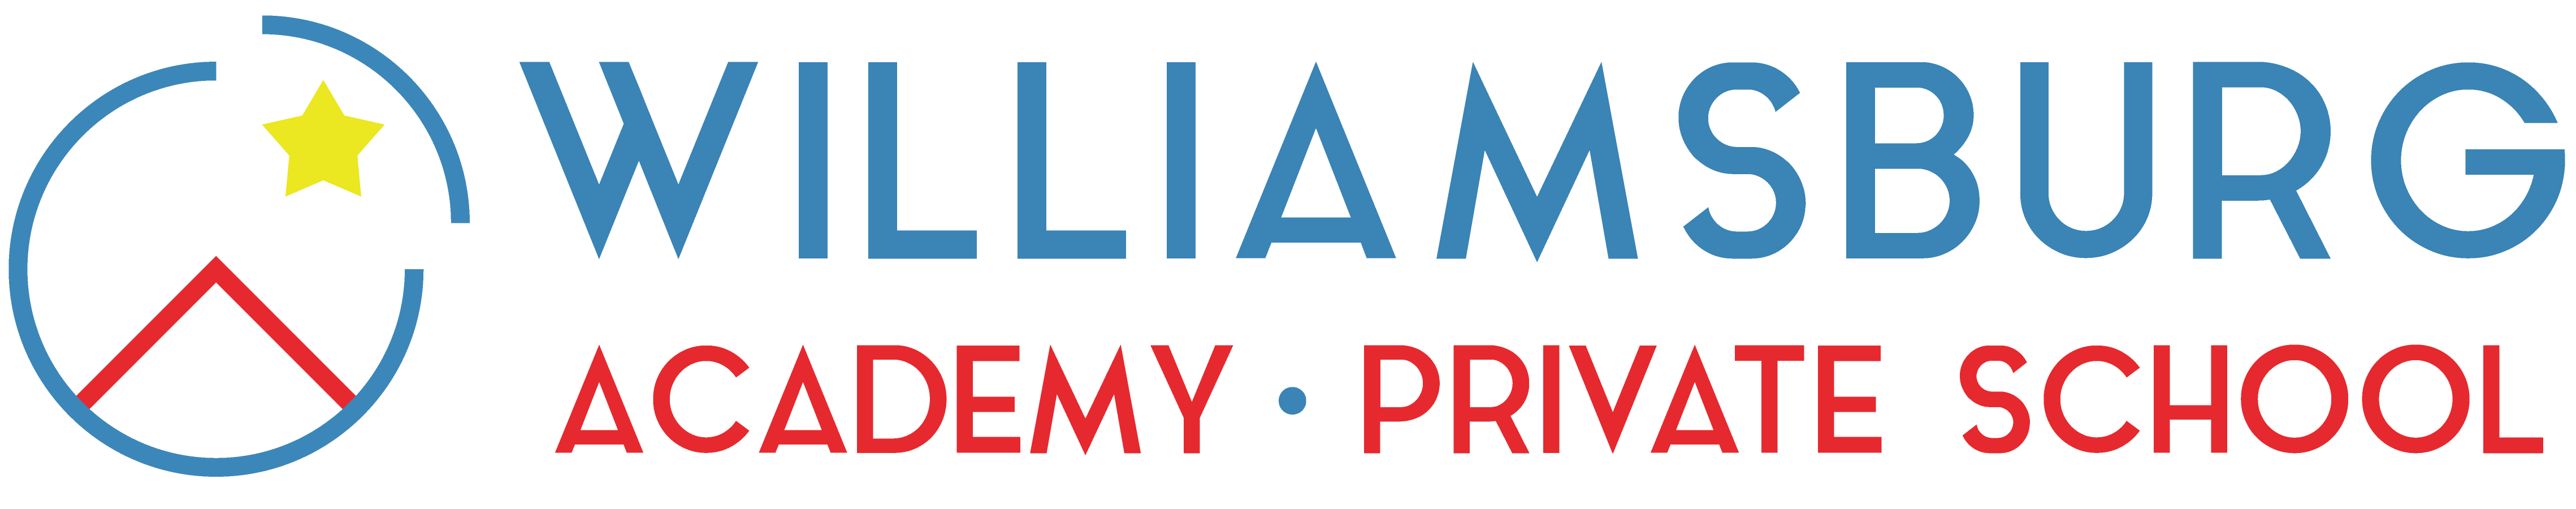 Williamsburg-Academy-Private-School_logo-color